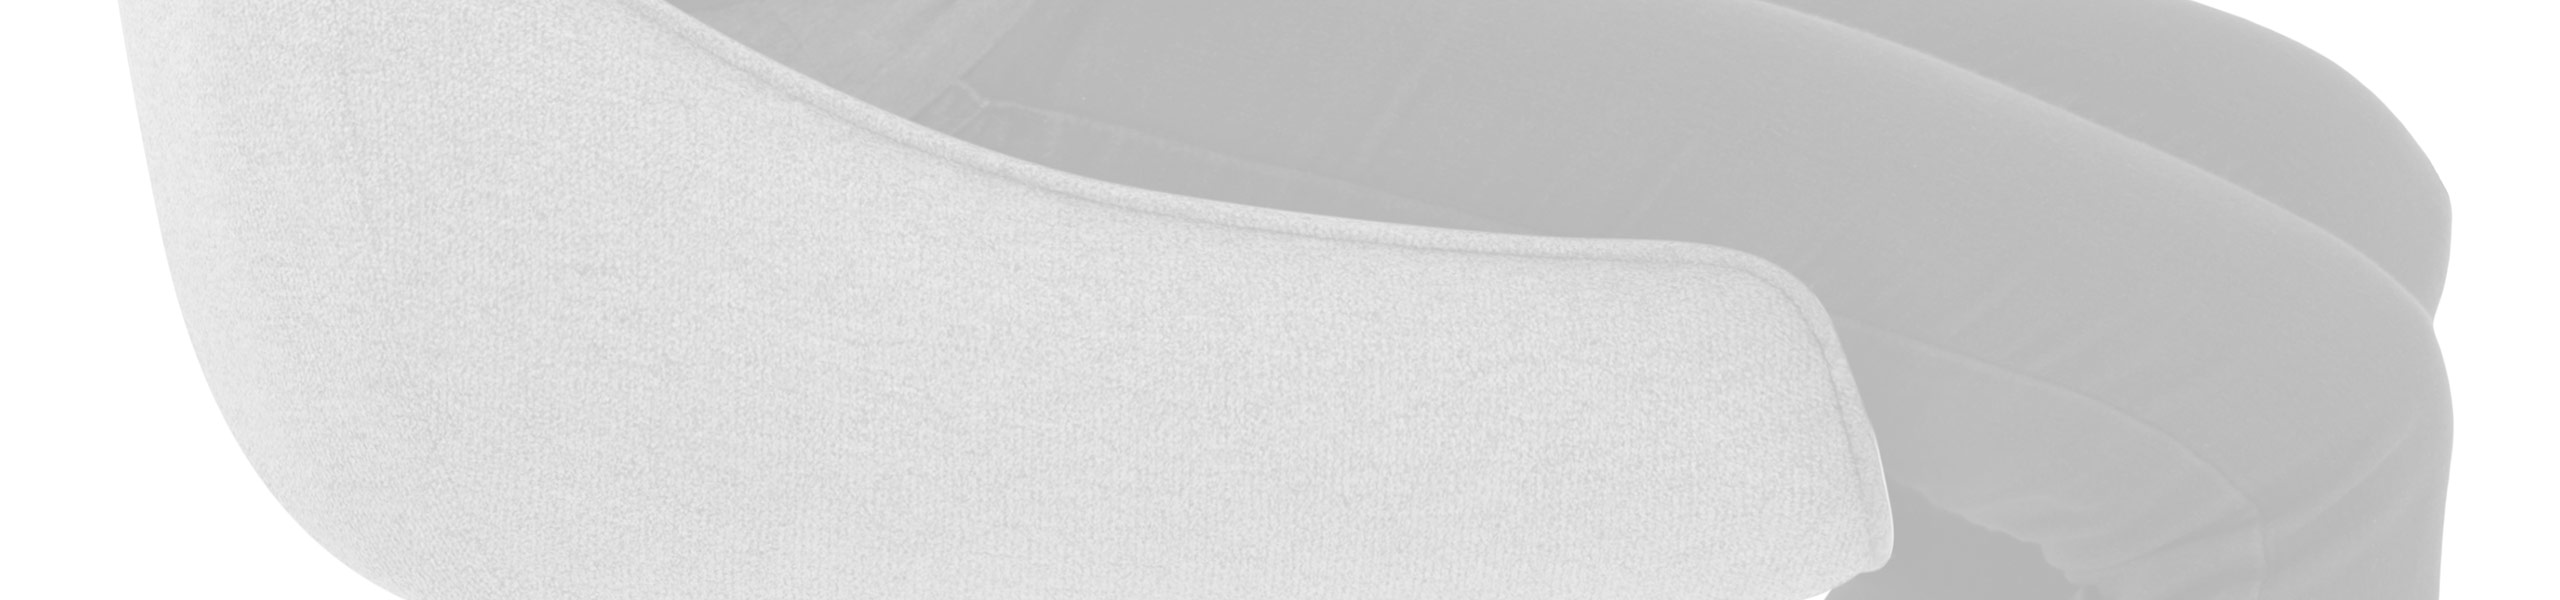 Creed Bar Stool Light Grey Fabric Review Banner